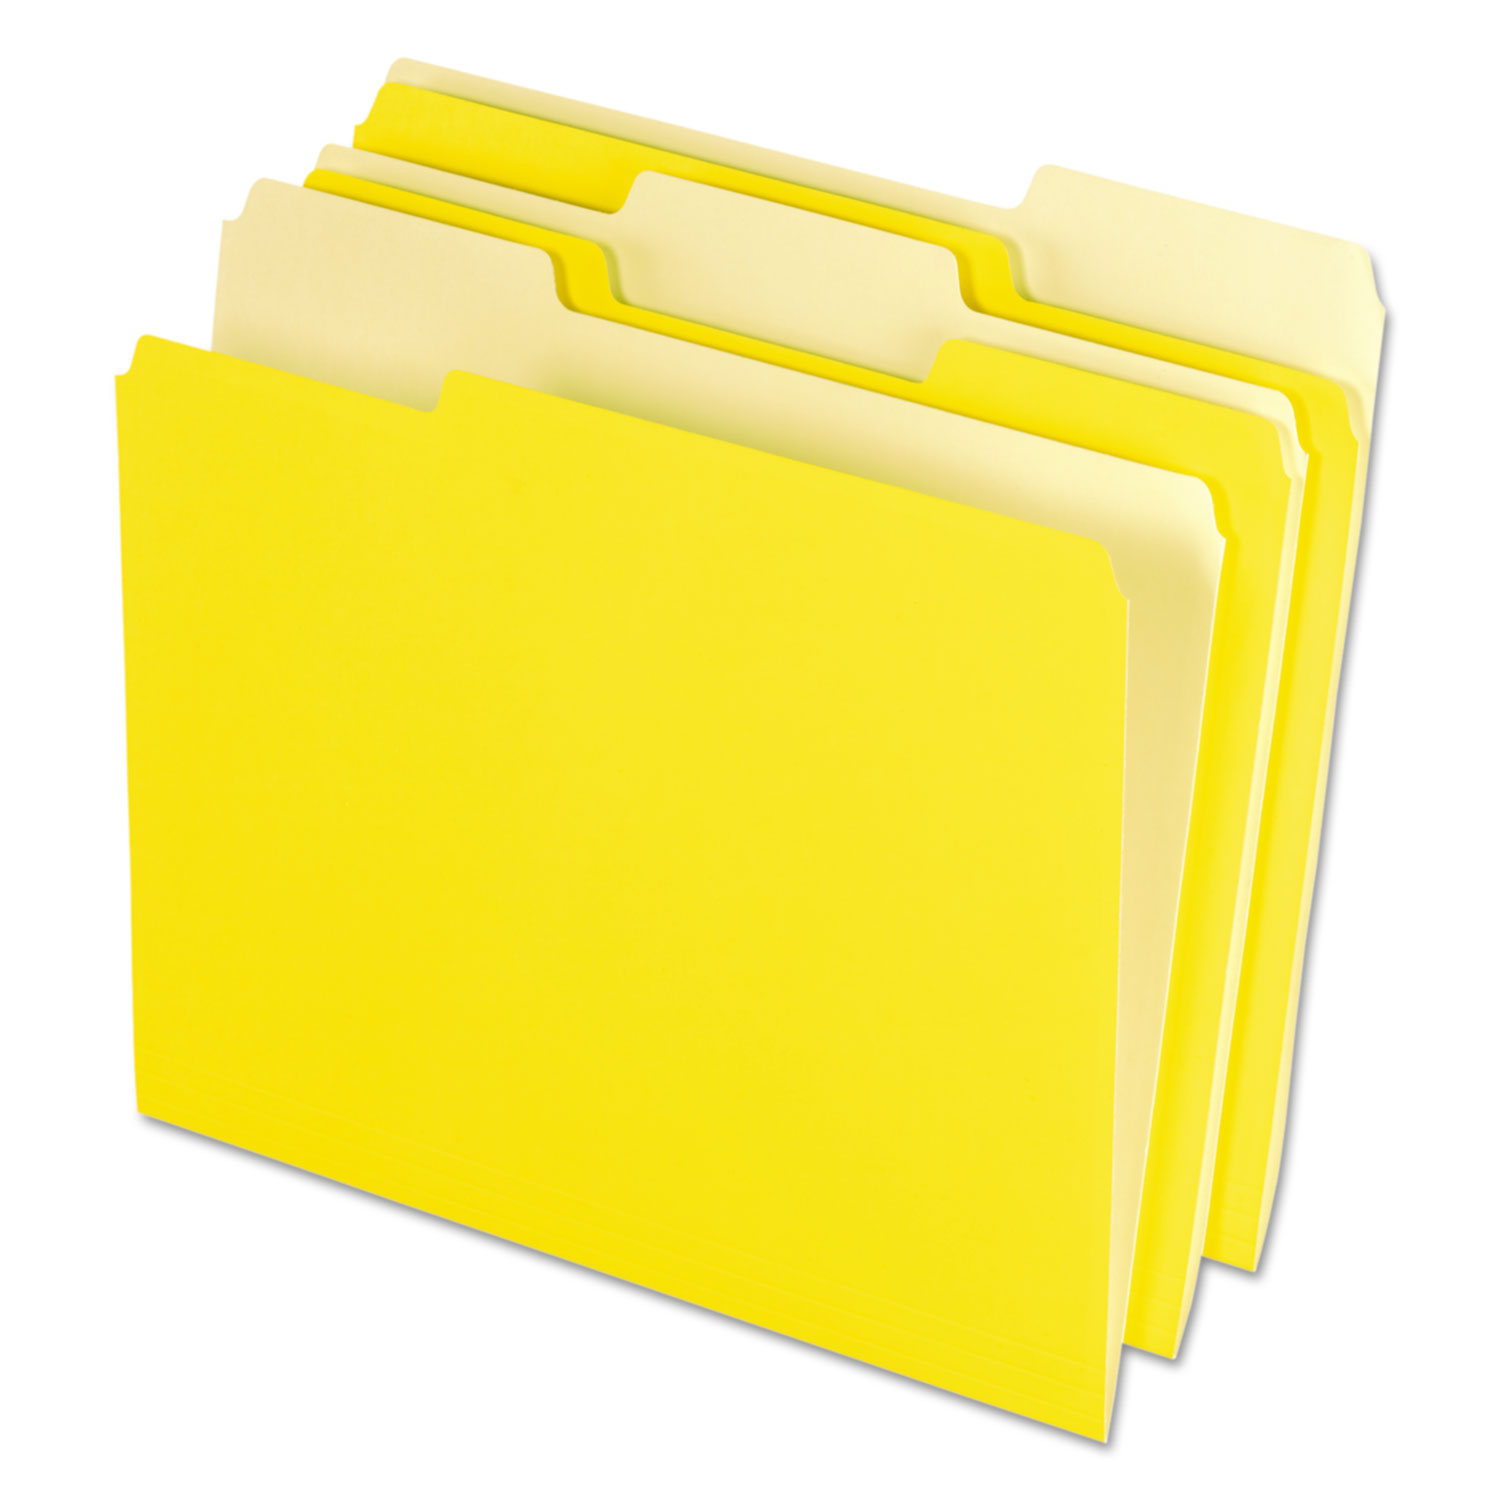  Pendaflex 4210 1/3 YEL Interior File Folders, 1/3-Cut Tabs, Letter Size, Yellow, 100/Box (PFX421013YEL) 